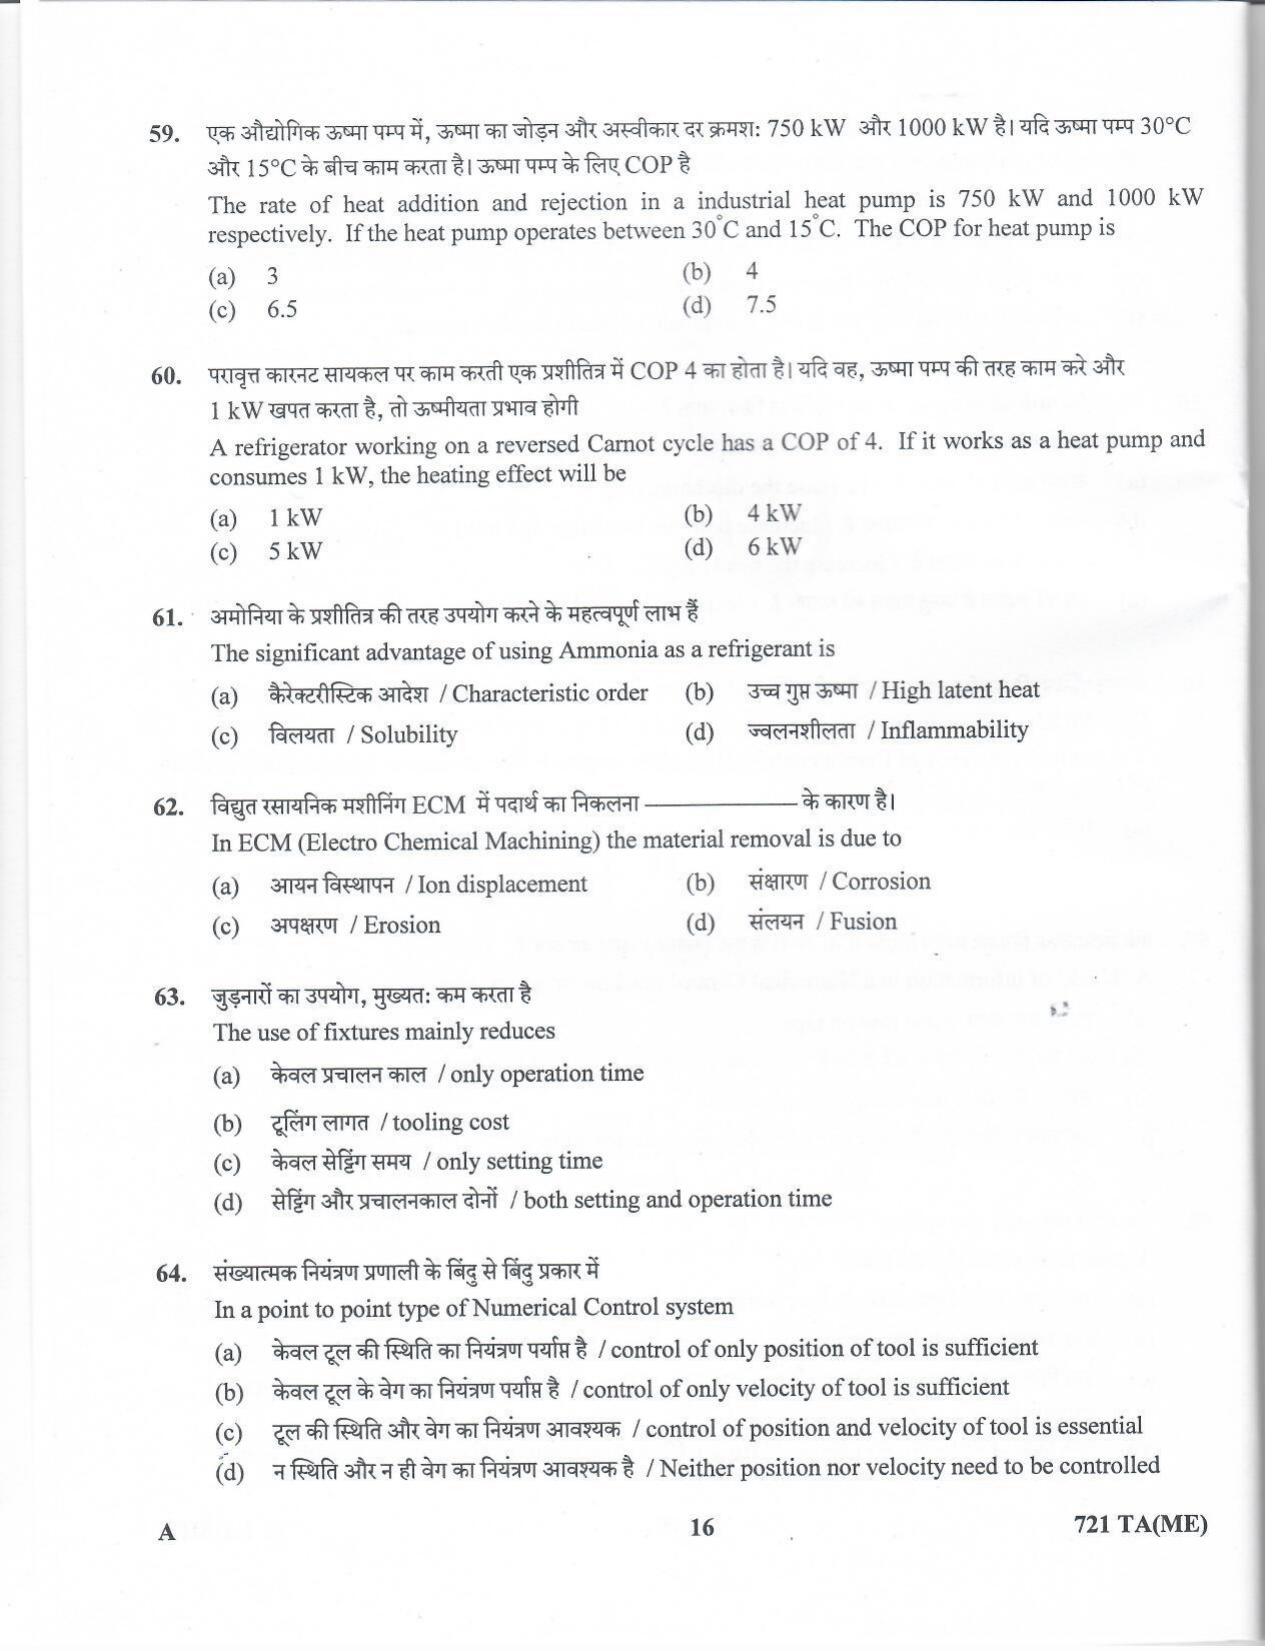 LPSC Technical Assistant (Mechanical) 2020 Question Paper - Page 15